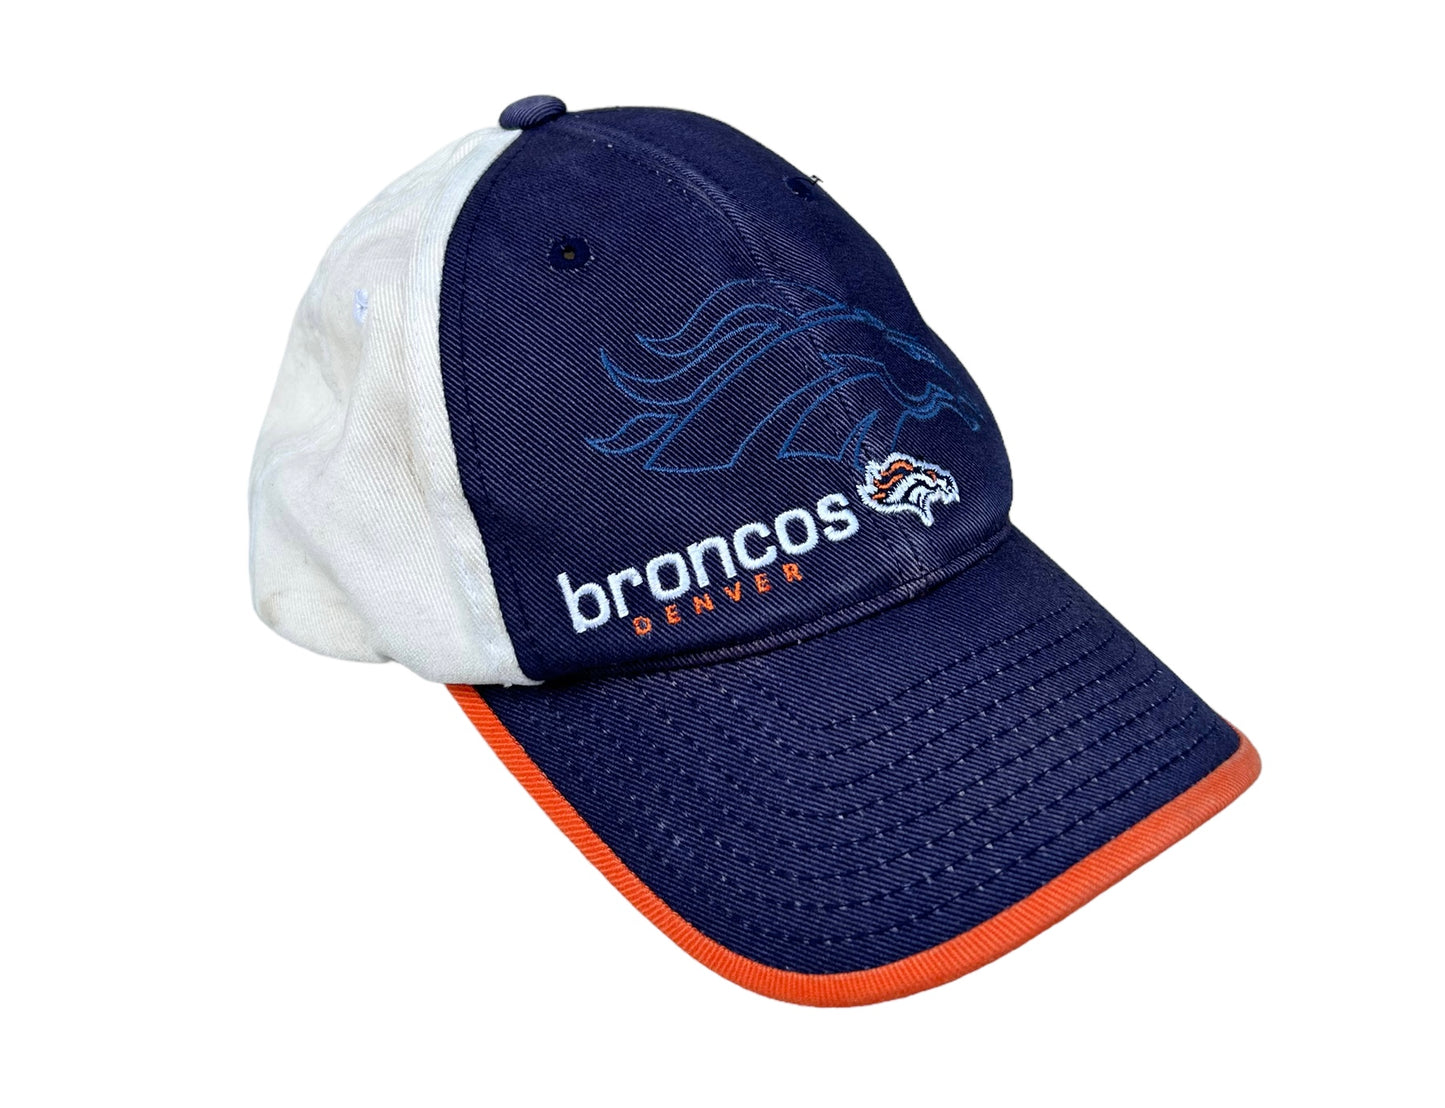 Vintage Denver Broncos Cap